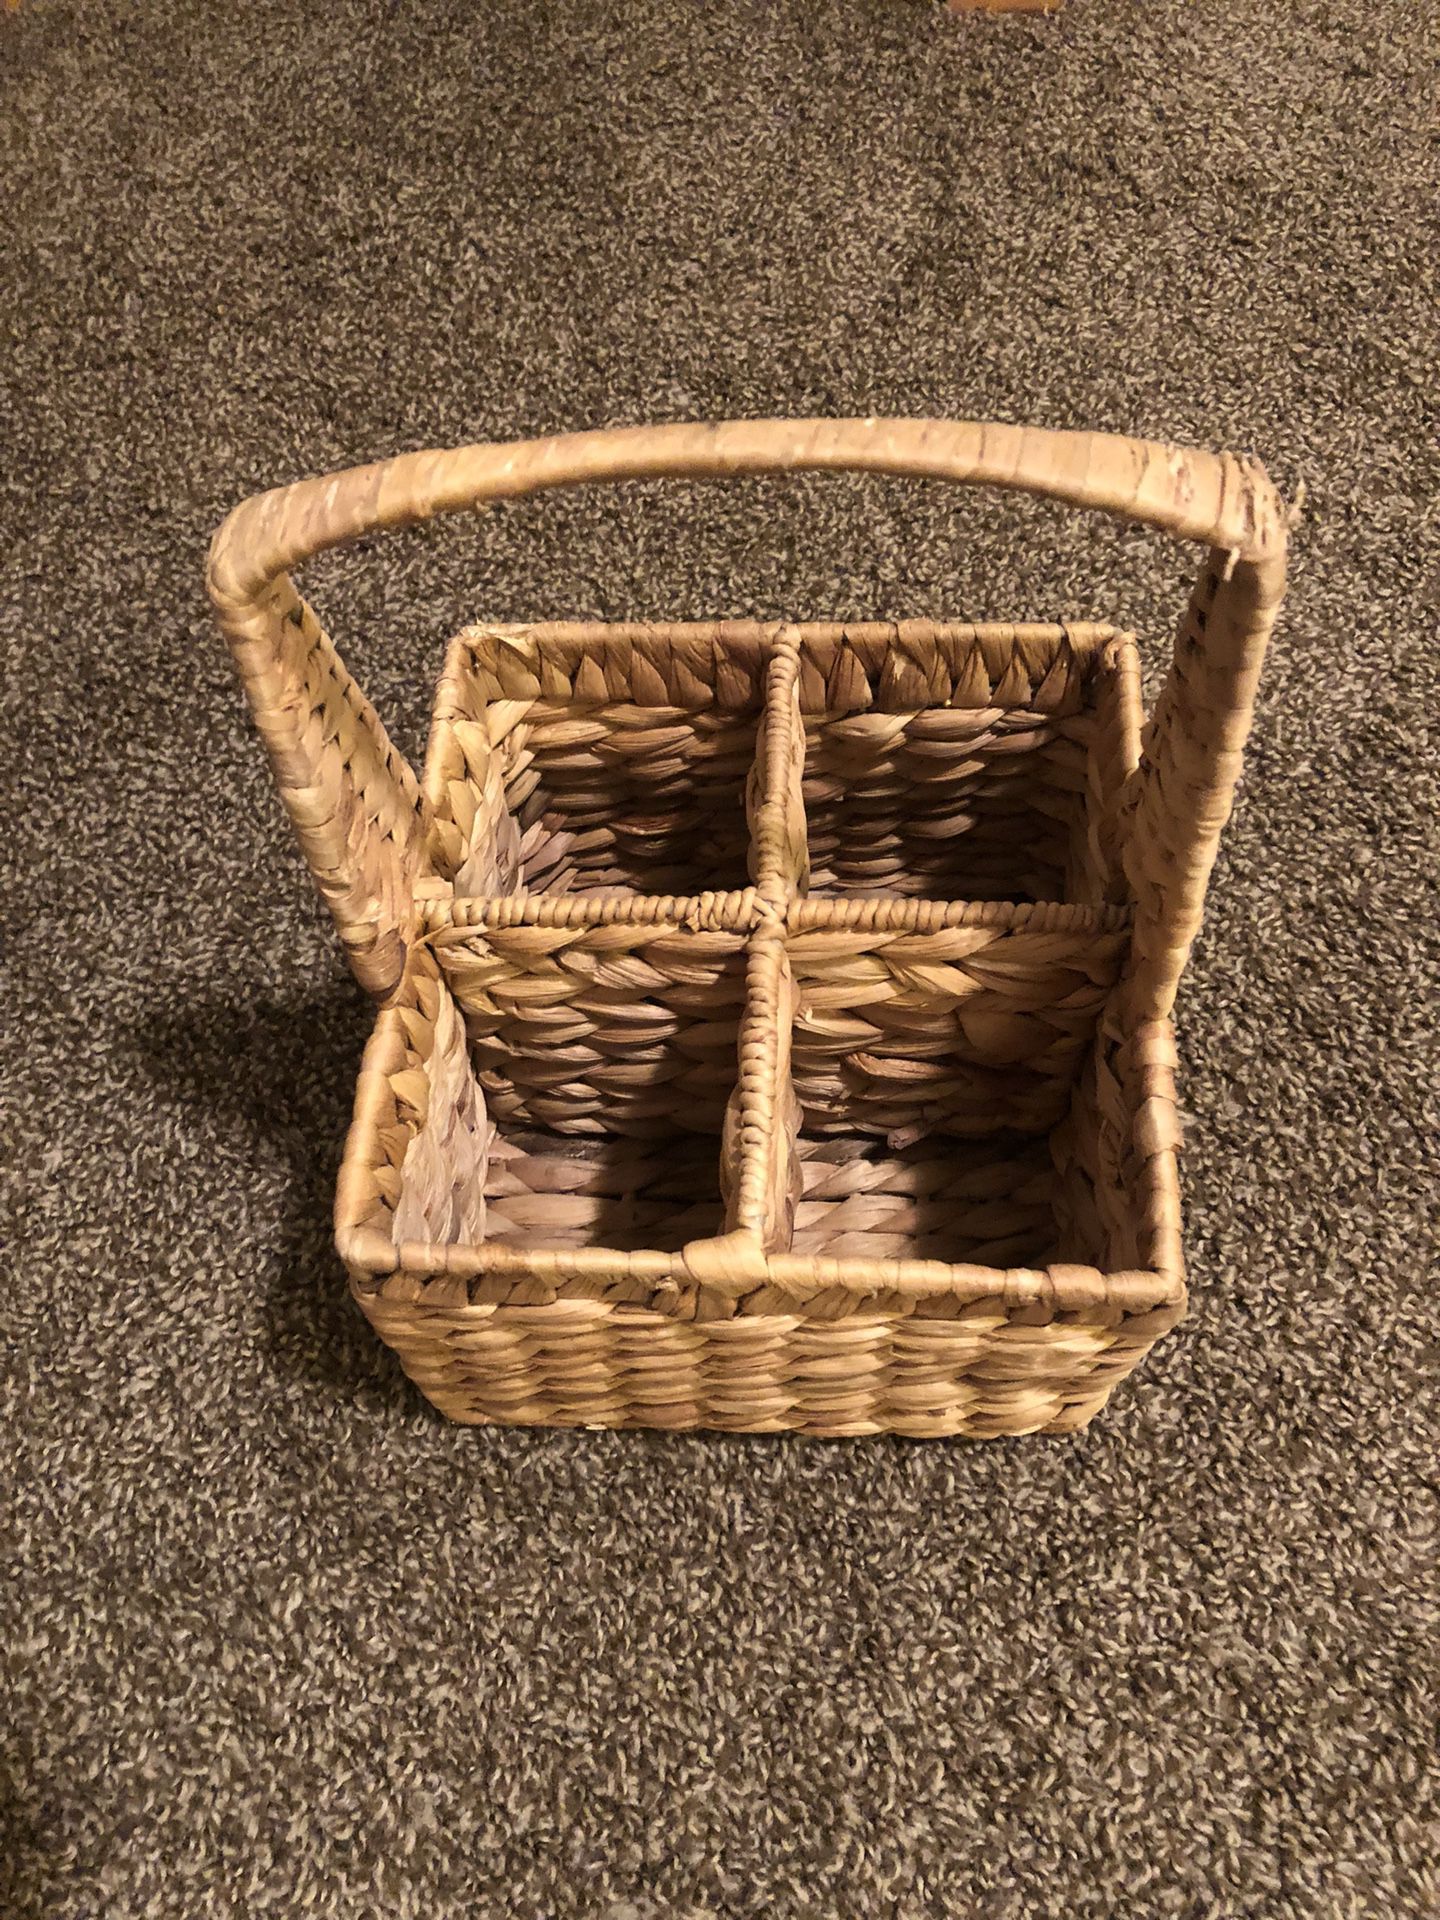 Woven Picnic Basket for drinks